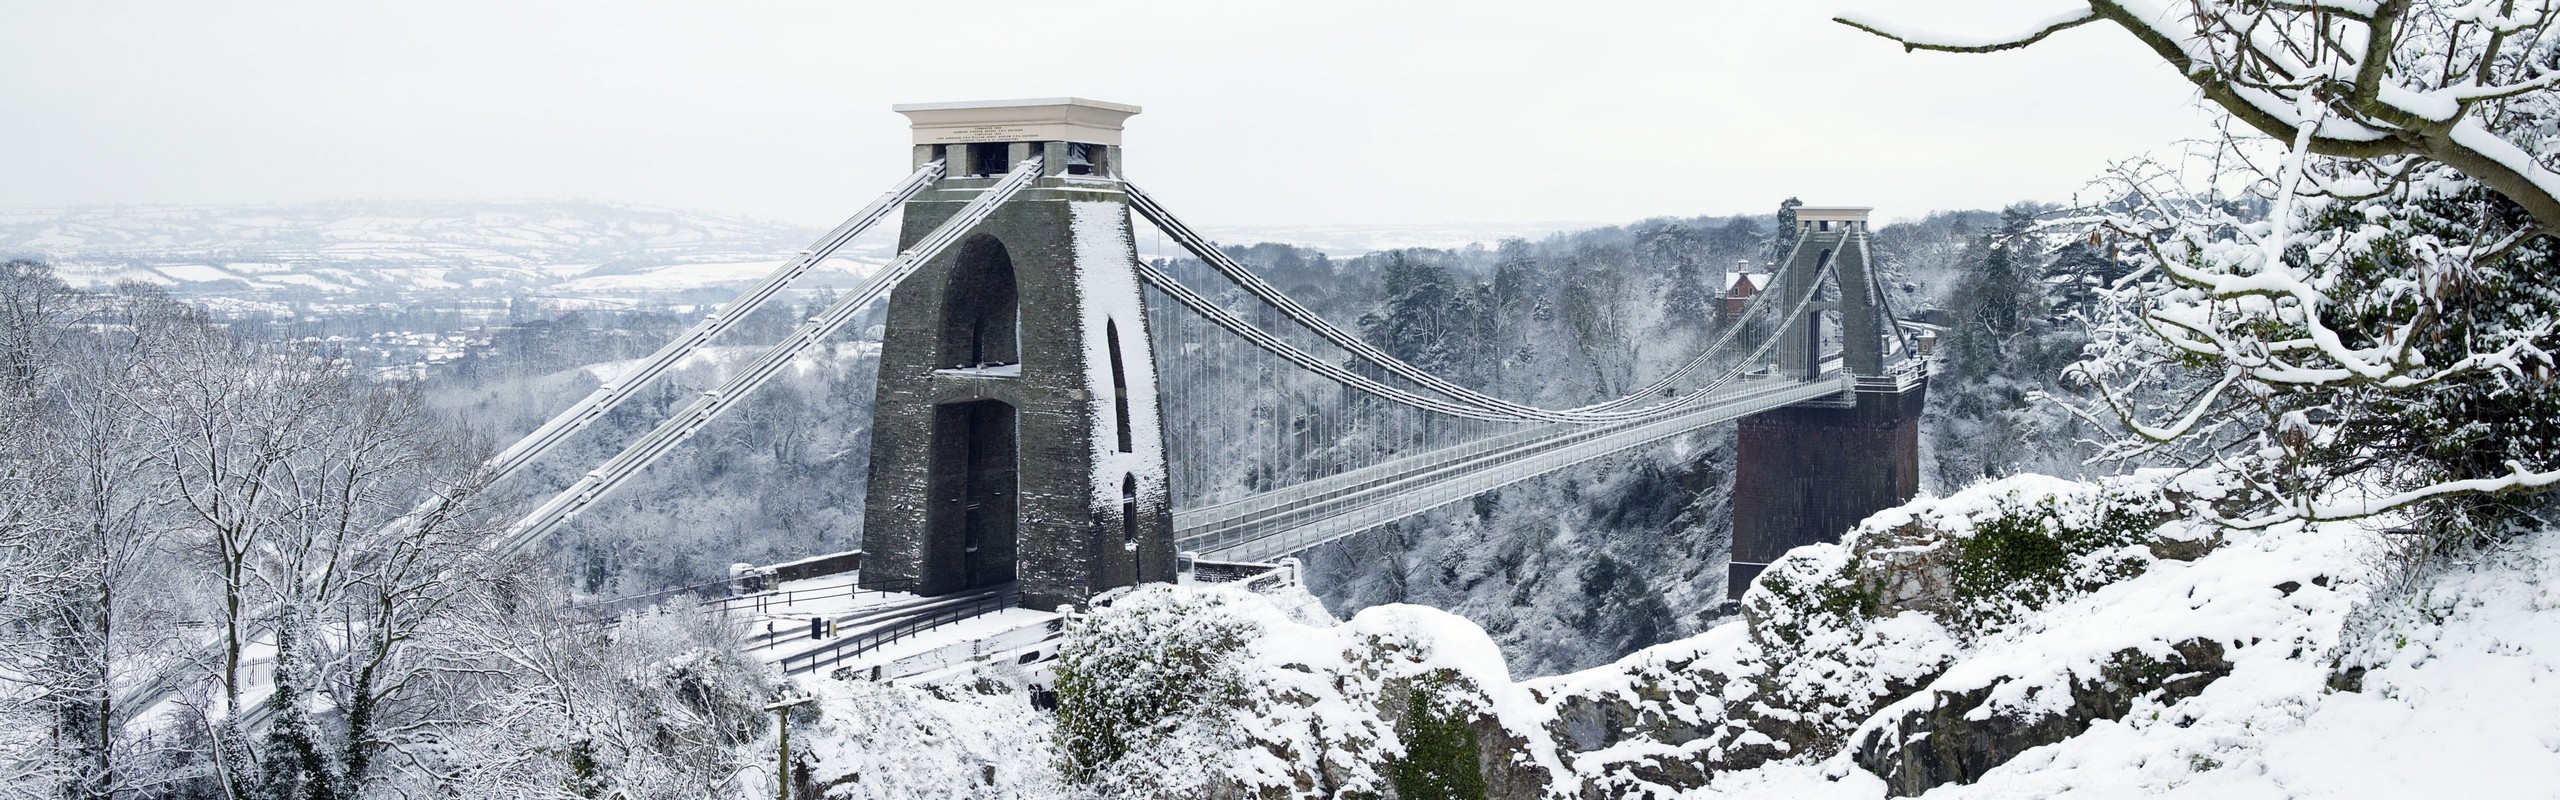 General 2560x800 bridge winter Bristol England Clifton Suspension Bridge outdoors snow